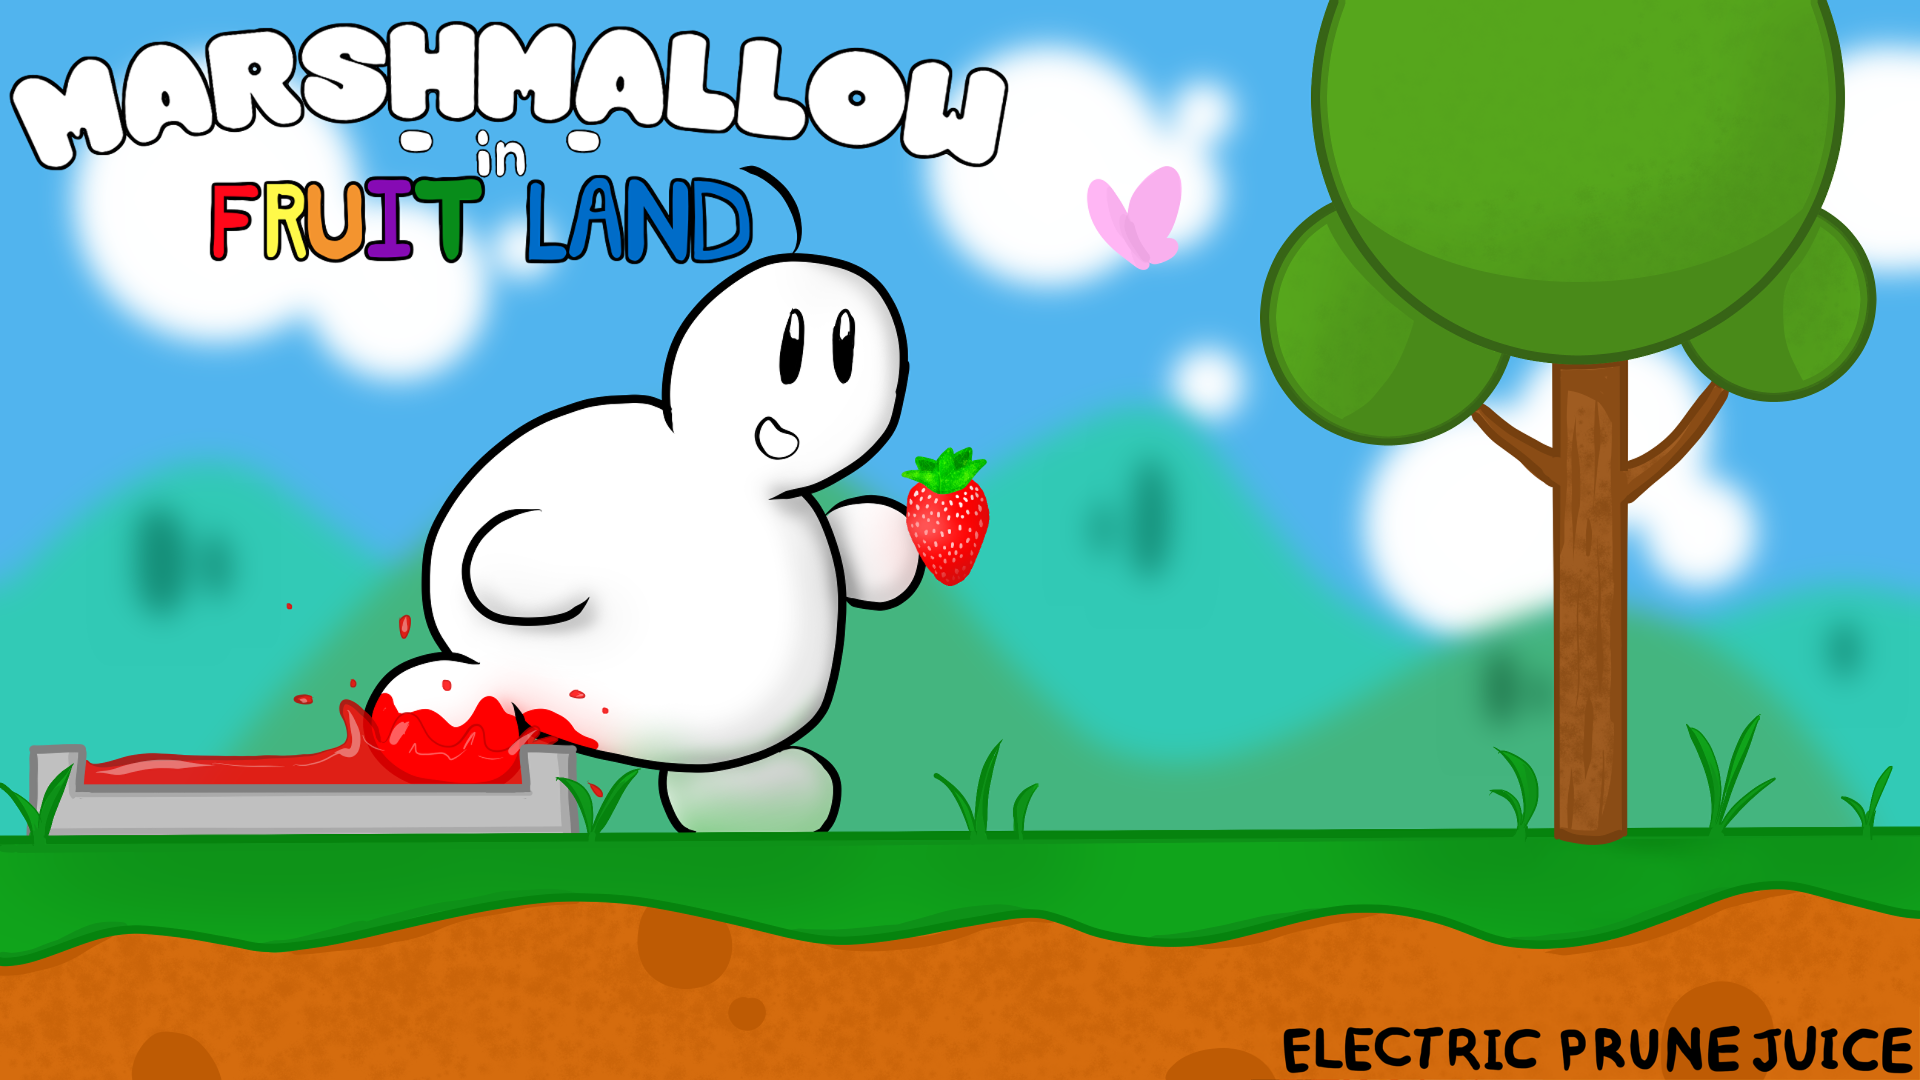 Marshmallow in Fruit Land